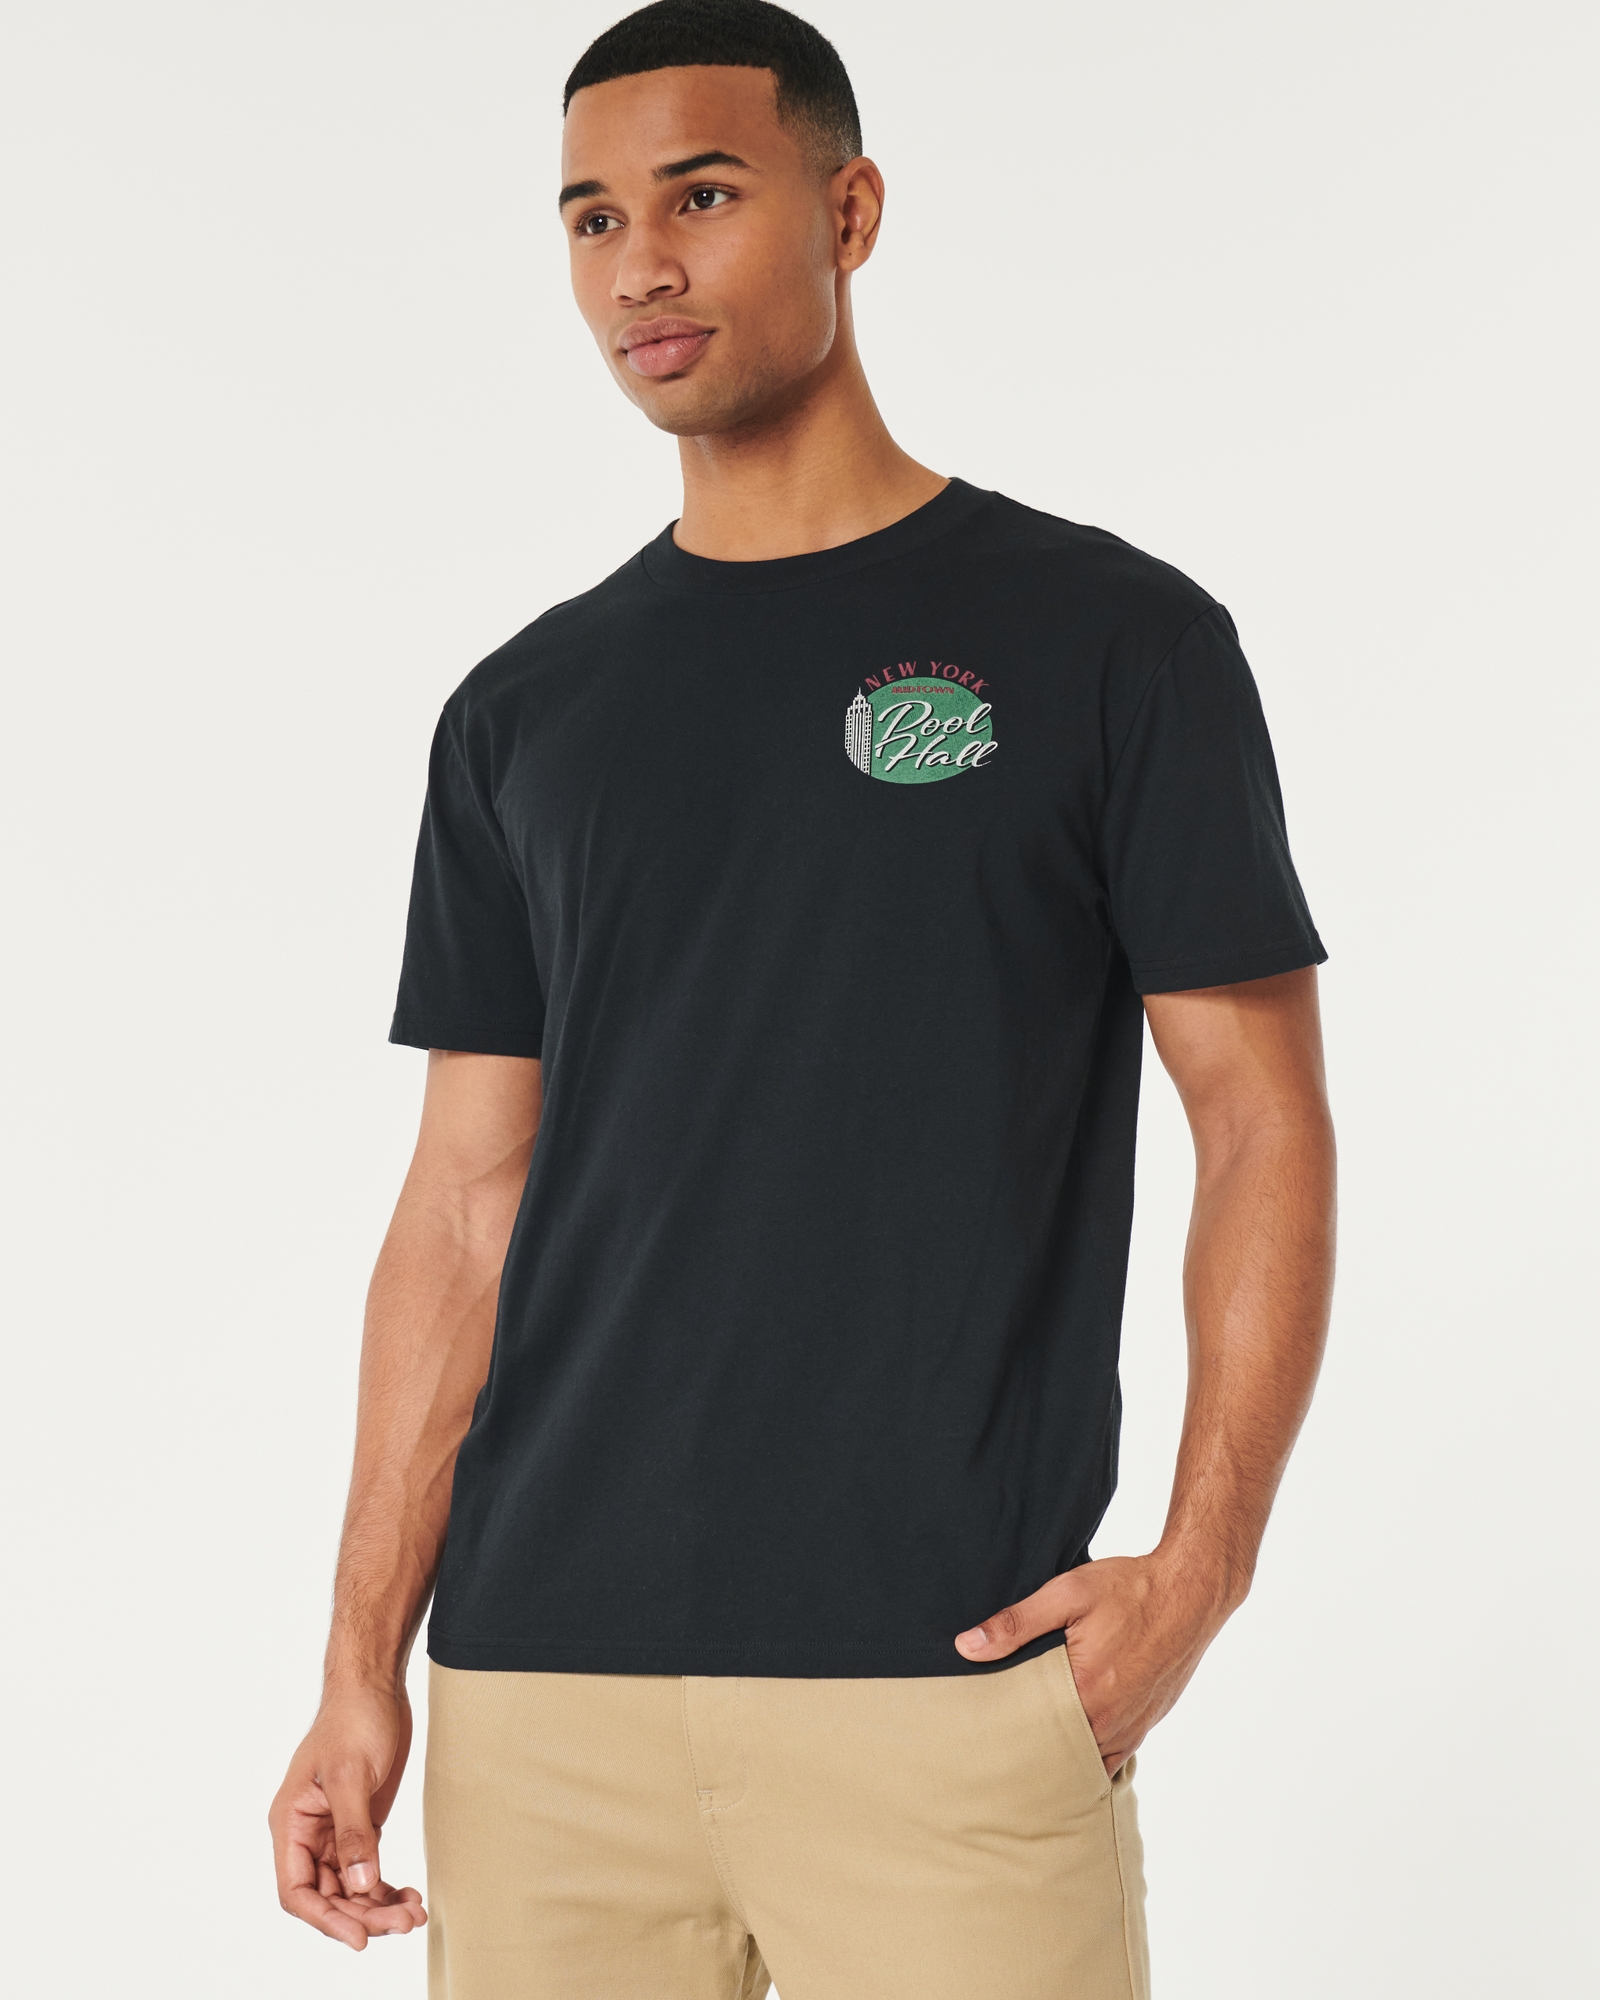 Hollister pop-smoke Graphic T-shirt Crew Neck Short Sleeve Size XL (B6)